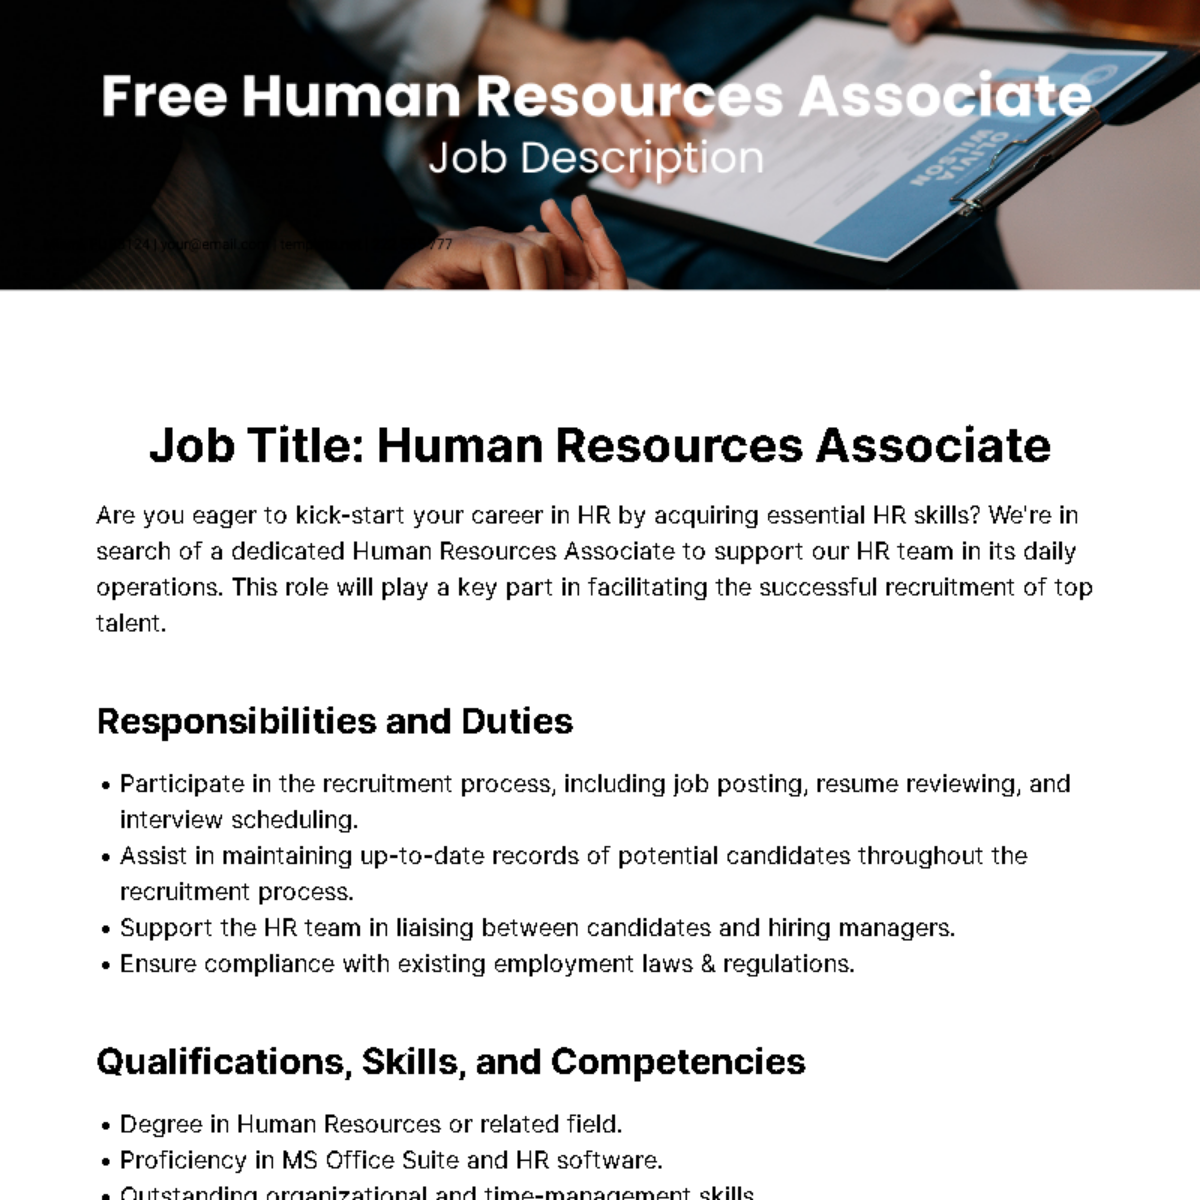 Human Resources Associate Job Description Template